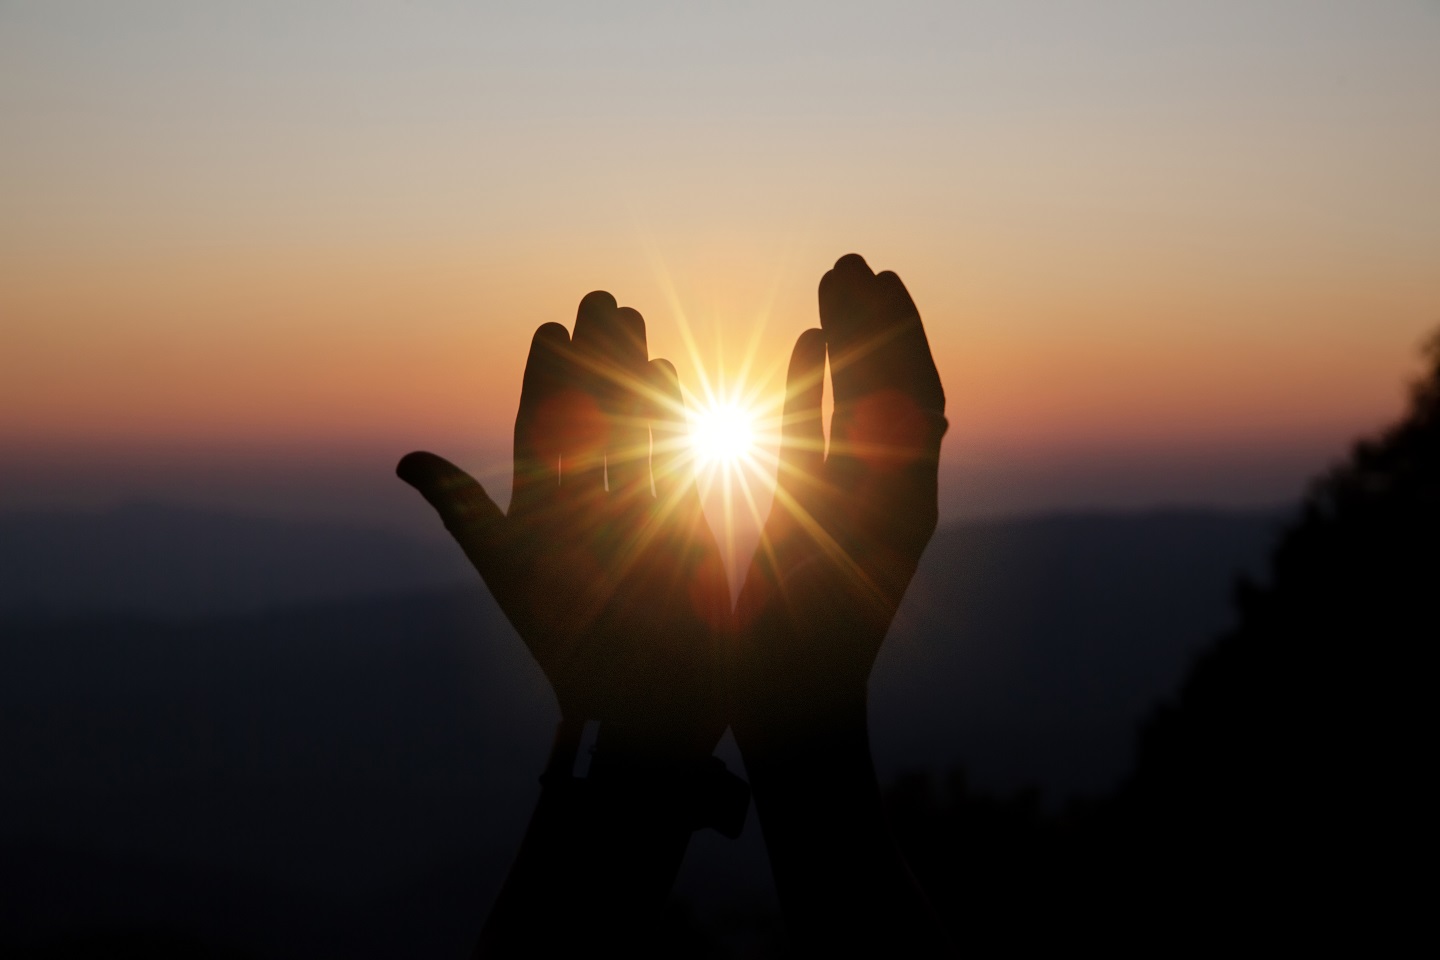 spiritual-prayer-hands-over-sun-shine-with-blurred-beautiful-sunset.jpg